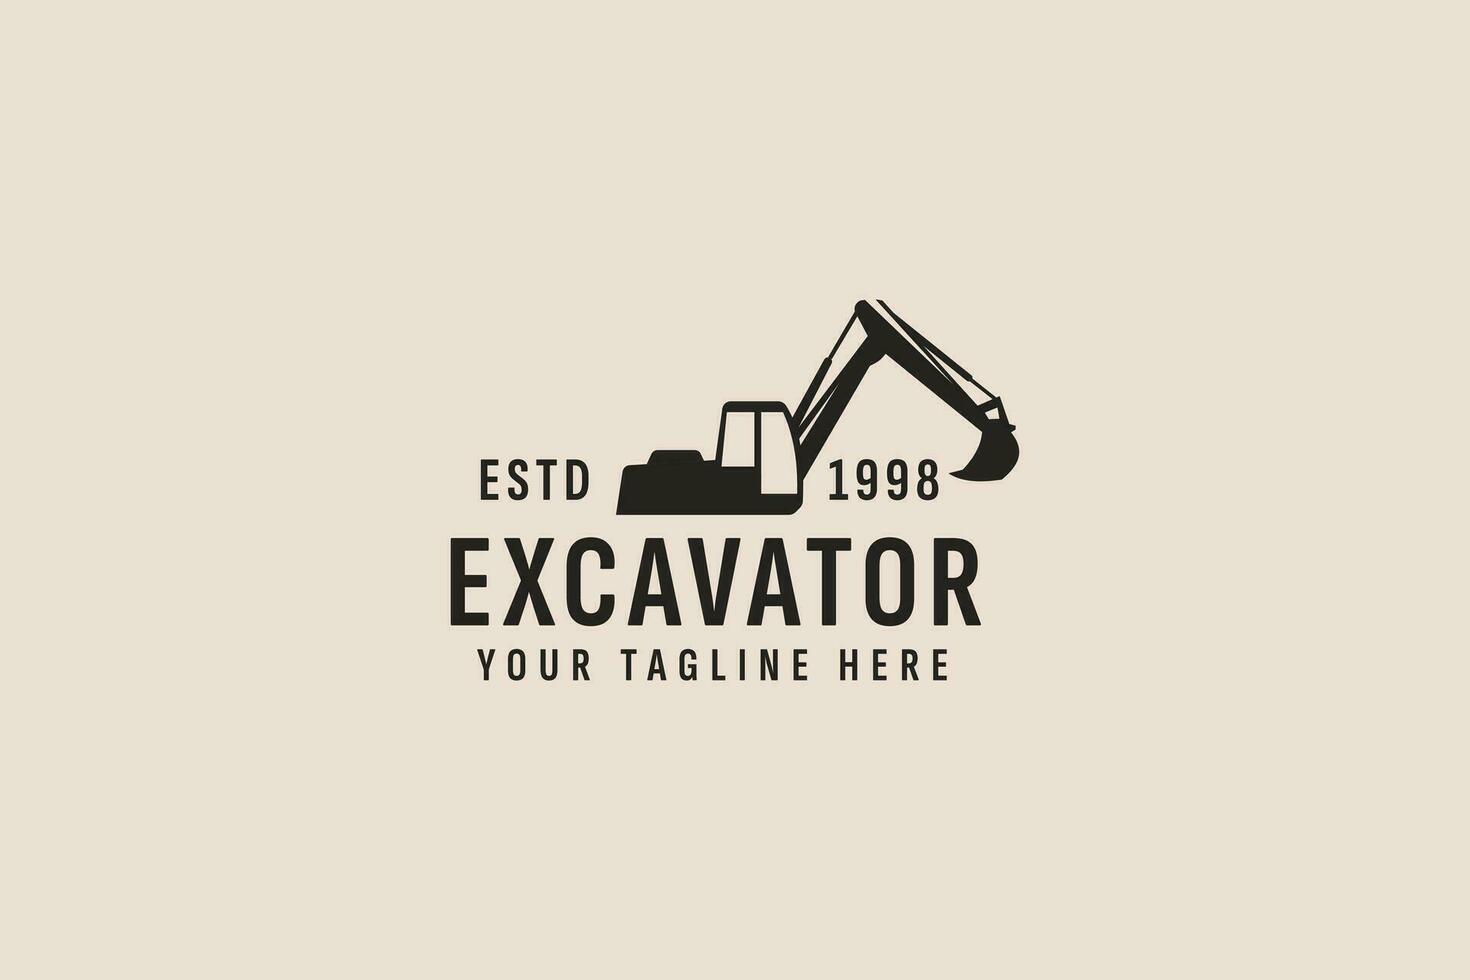 vintage style excavator logo vector icon illustration